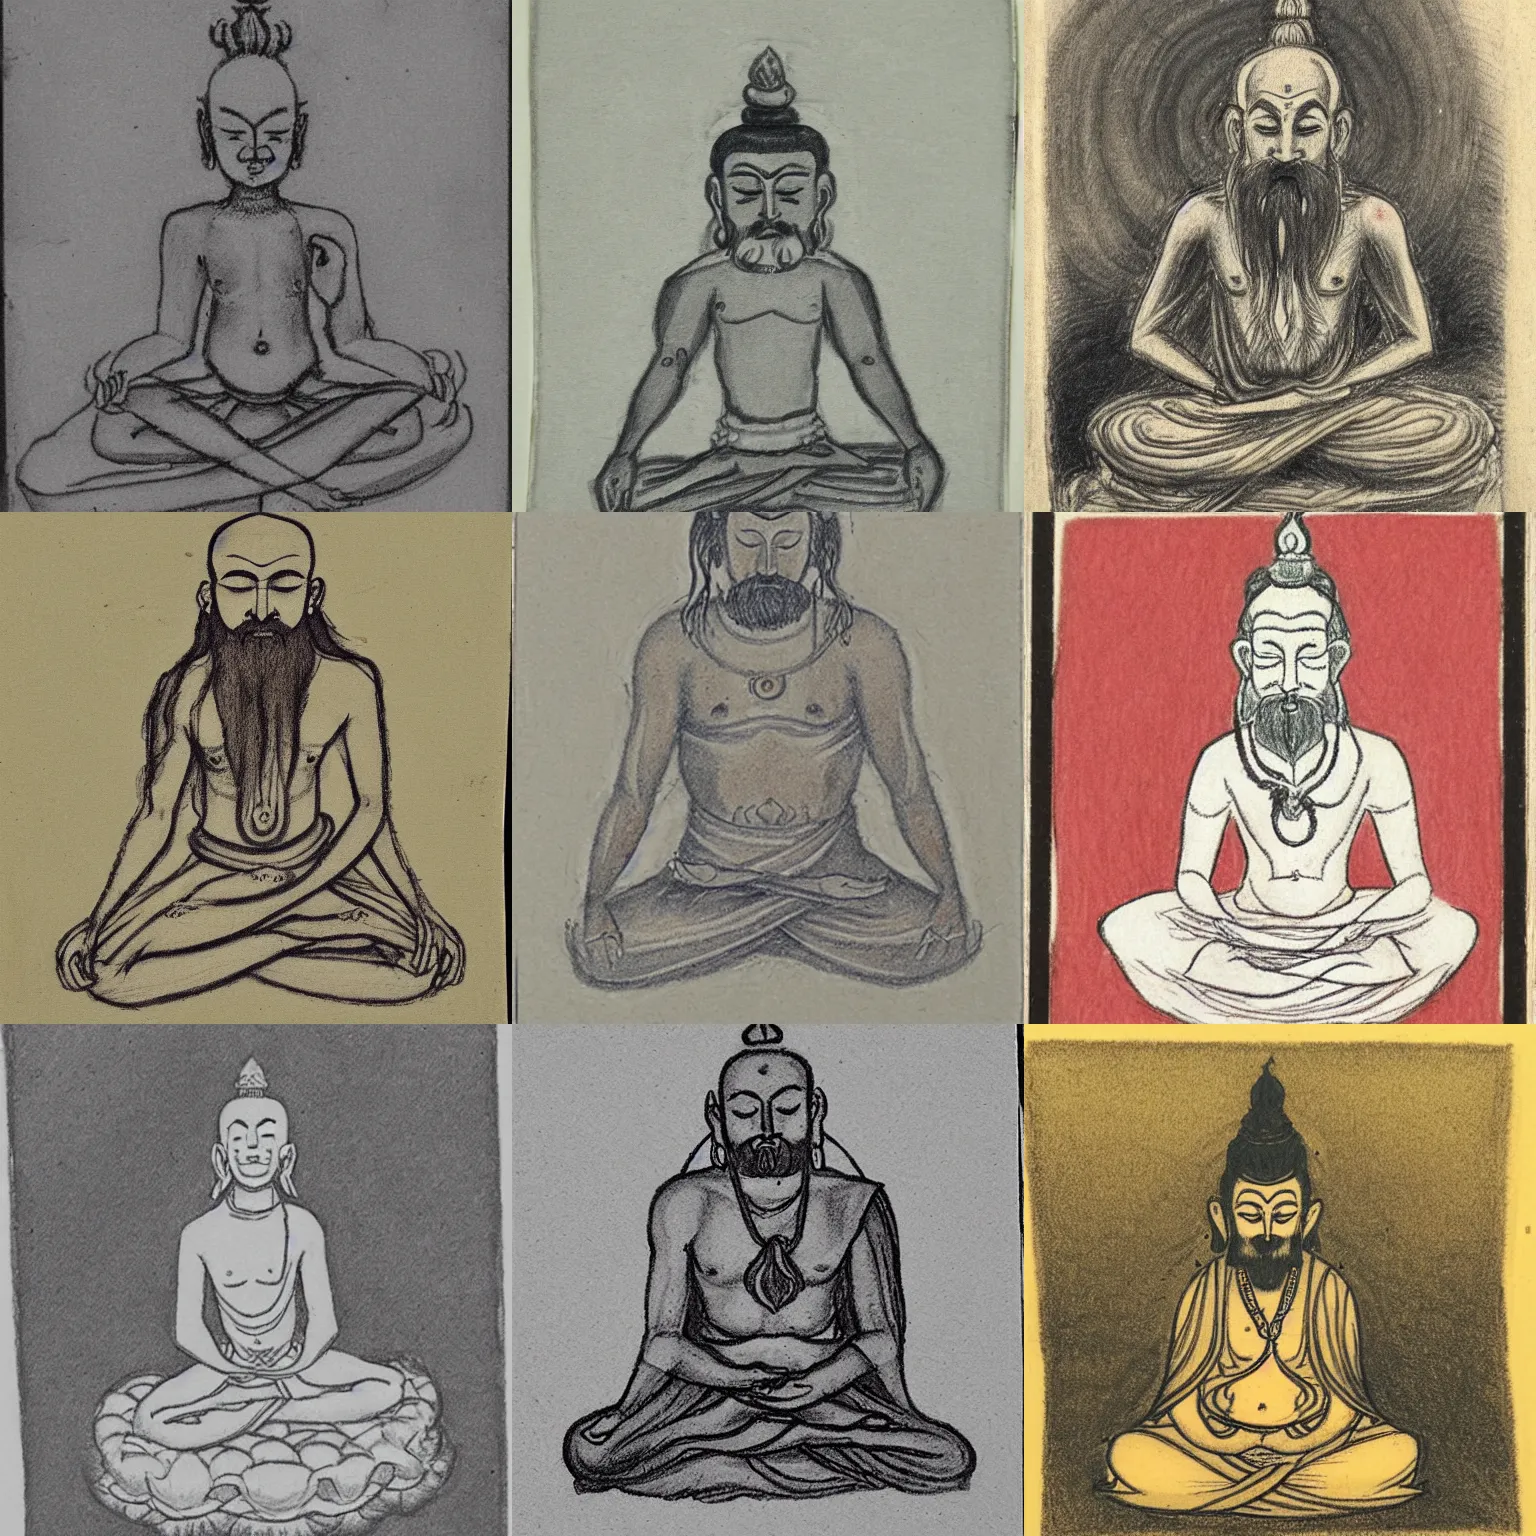 Prompt: sketch of a chibi stylized sadhu meditating, etching